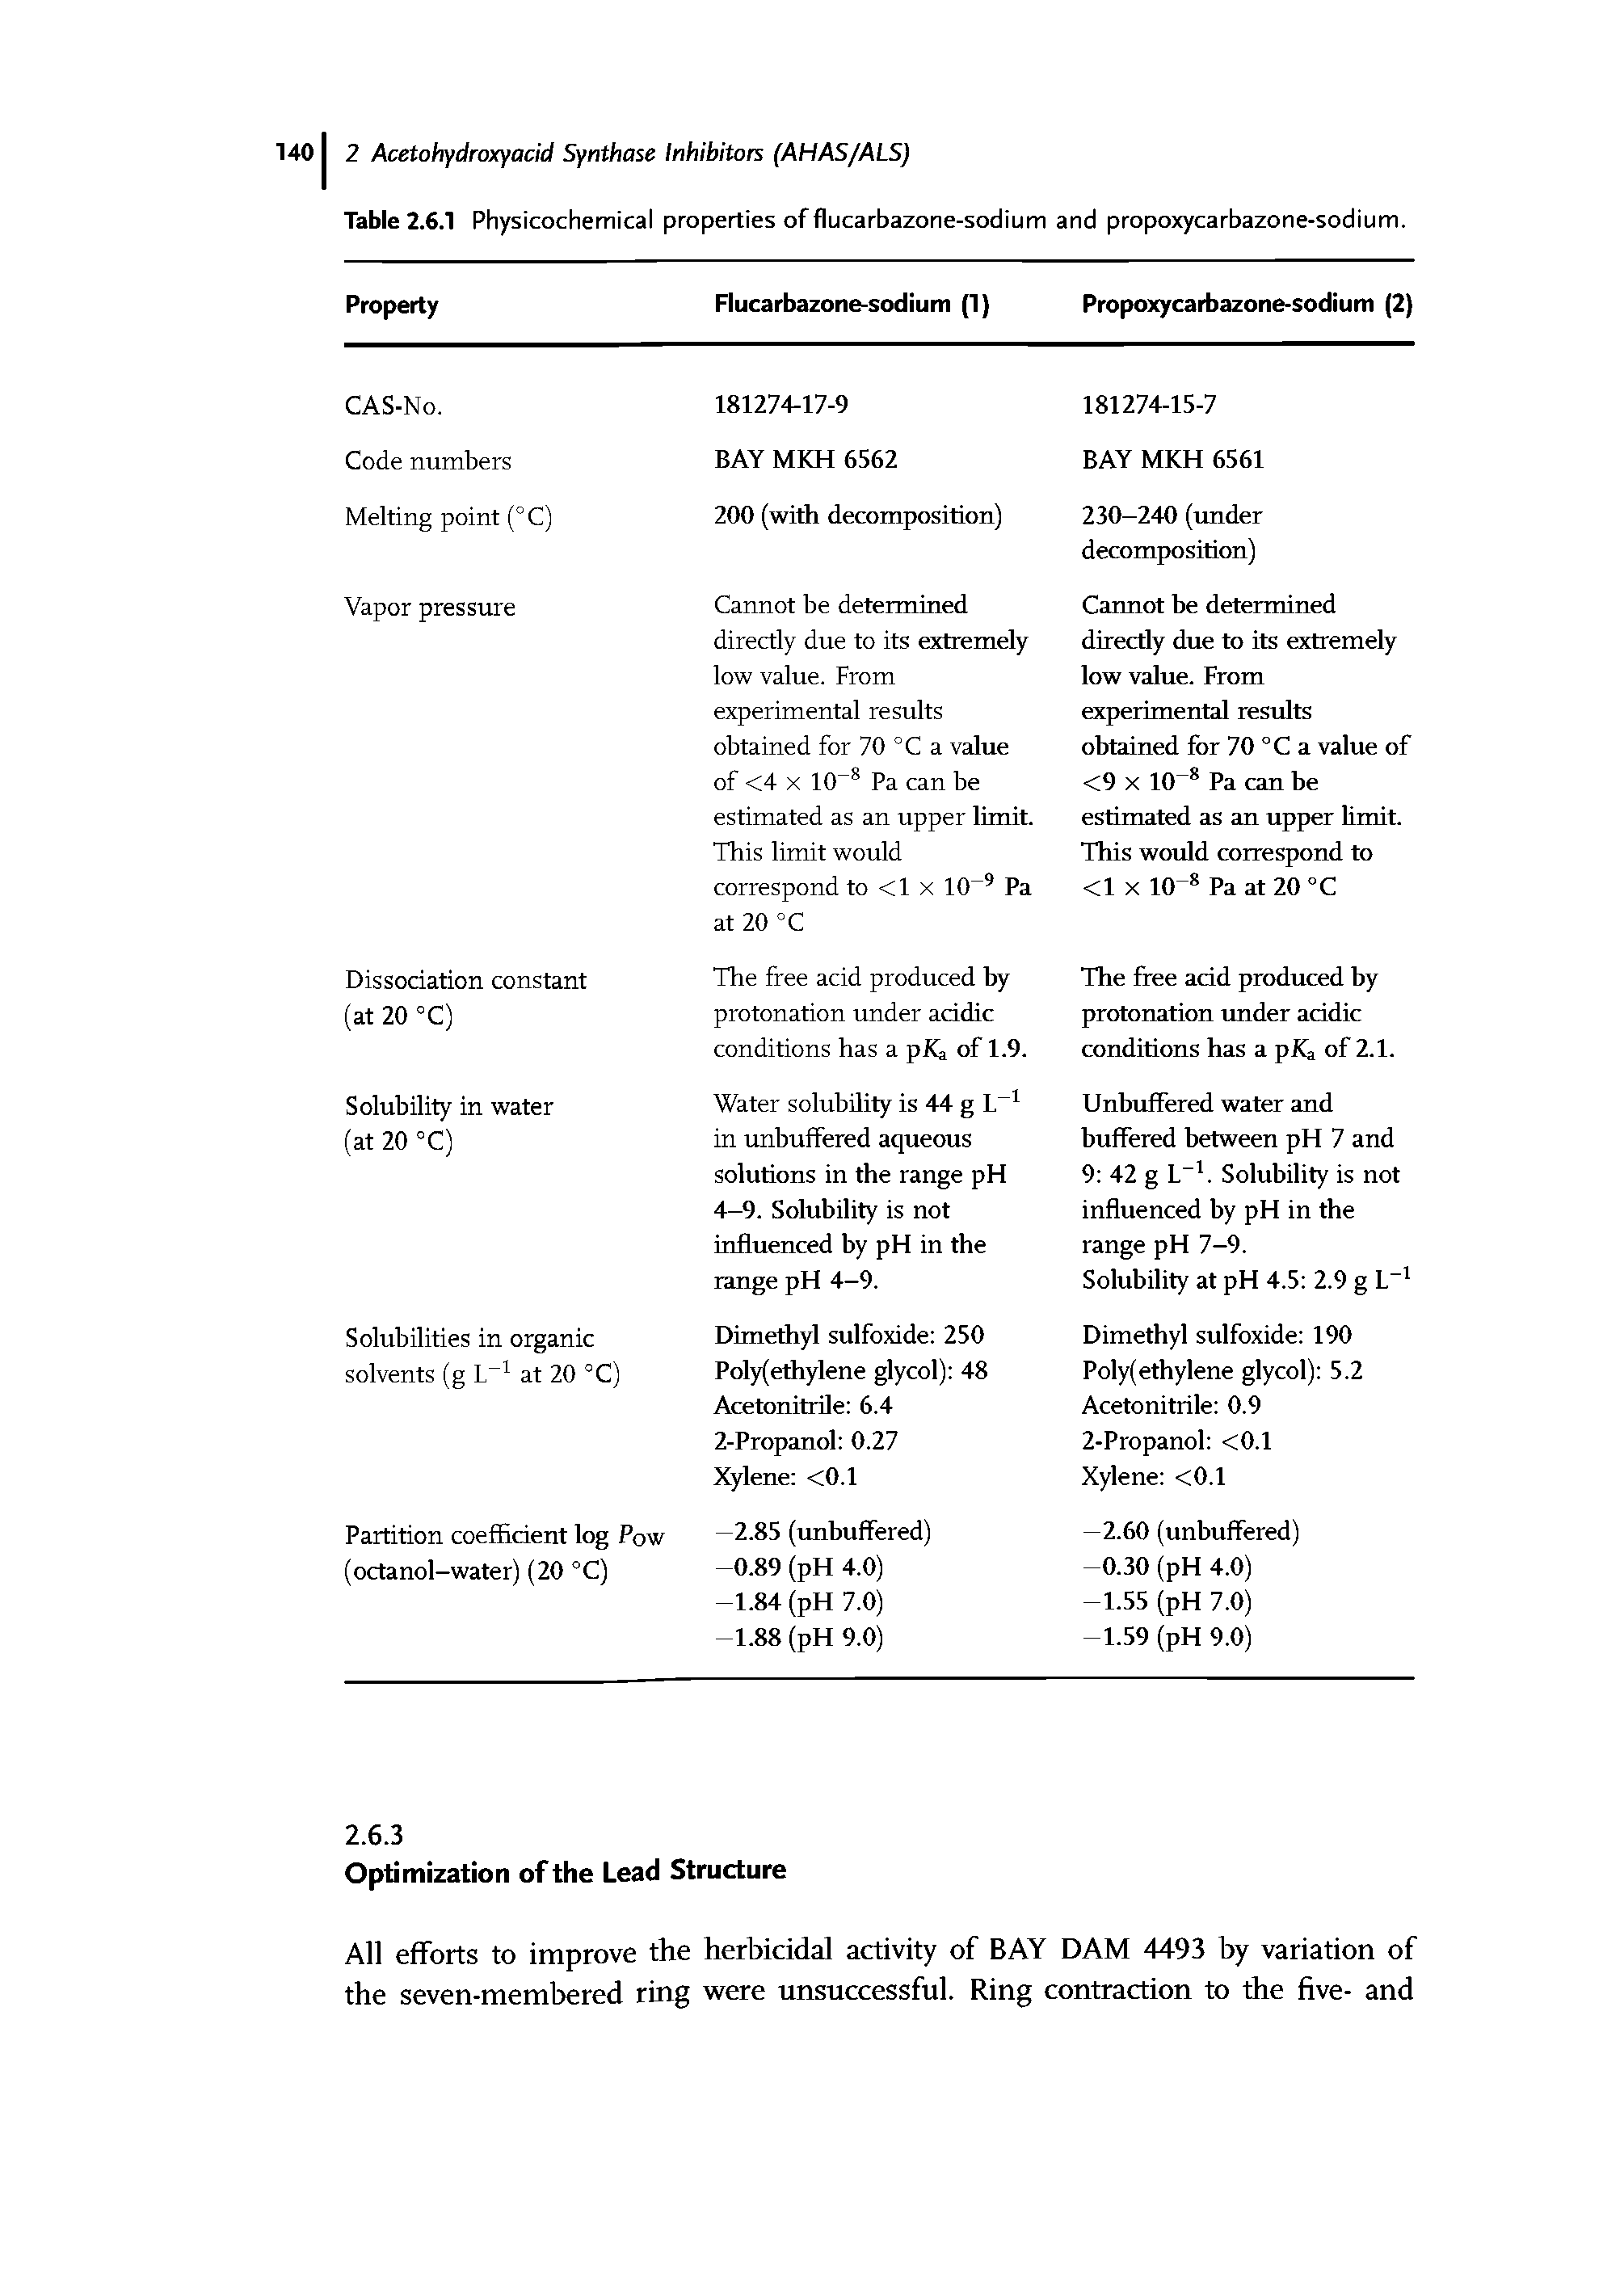 Table 2.6.1 Physicochemical properties of flucarbazone-sodium and propoxycarbazone-sodium.